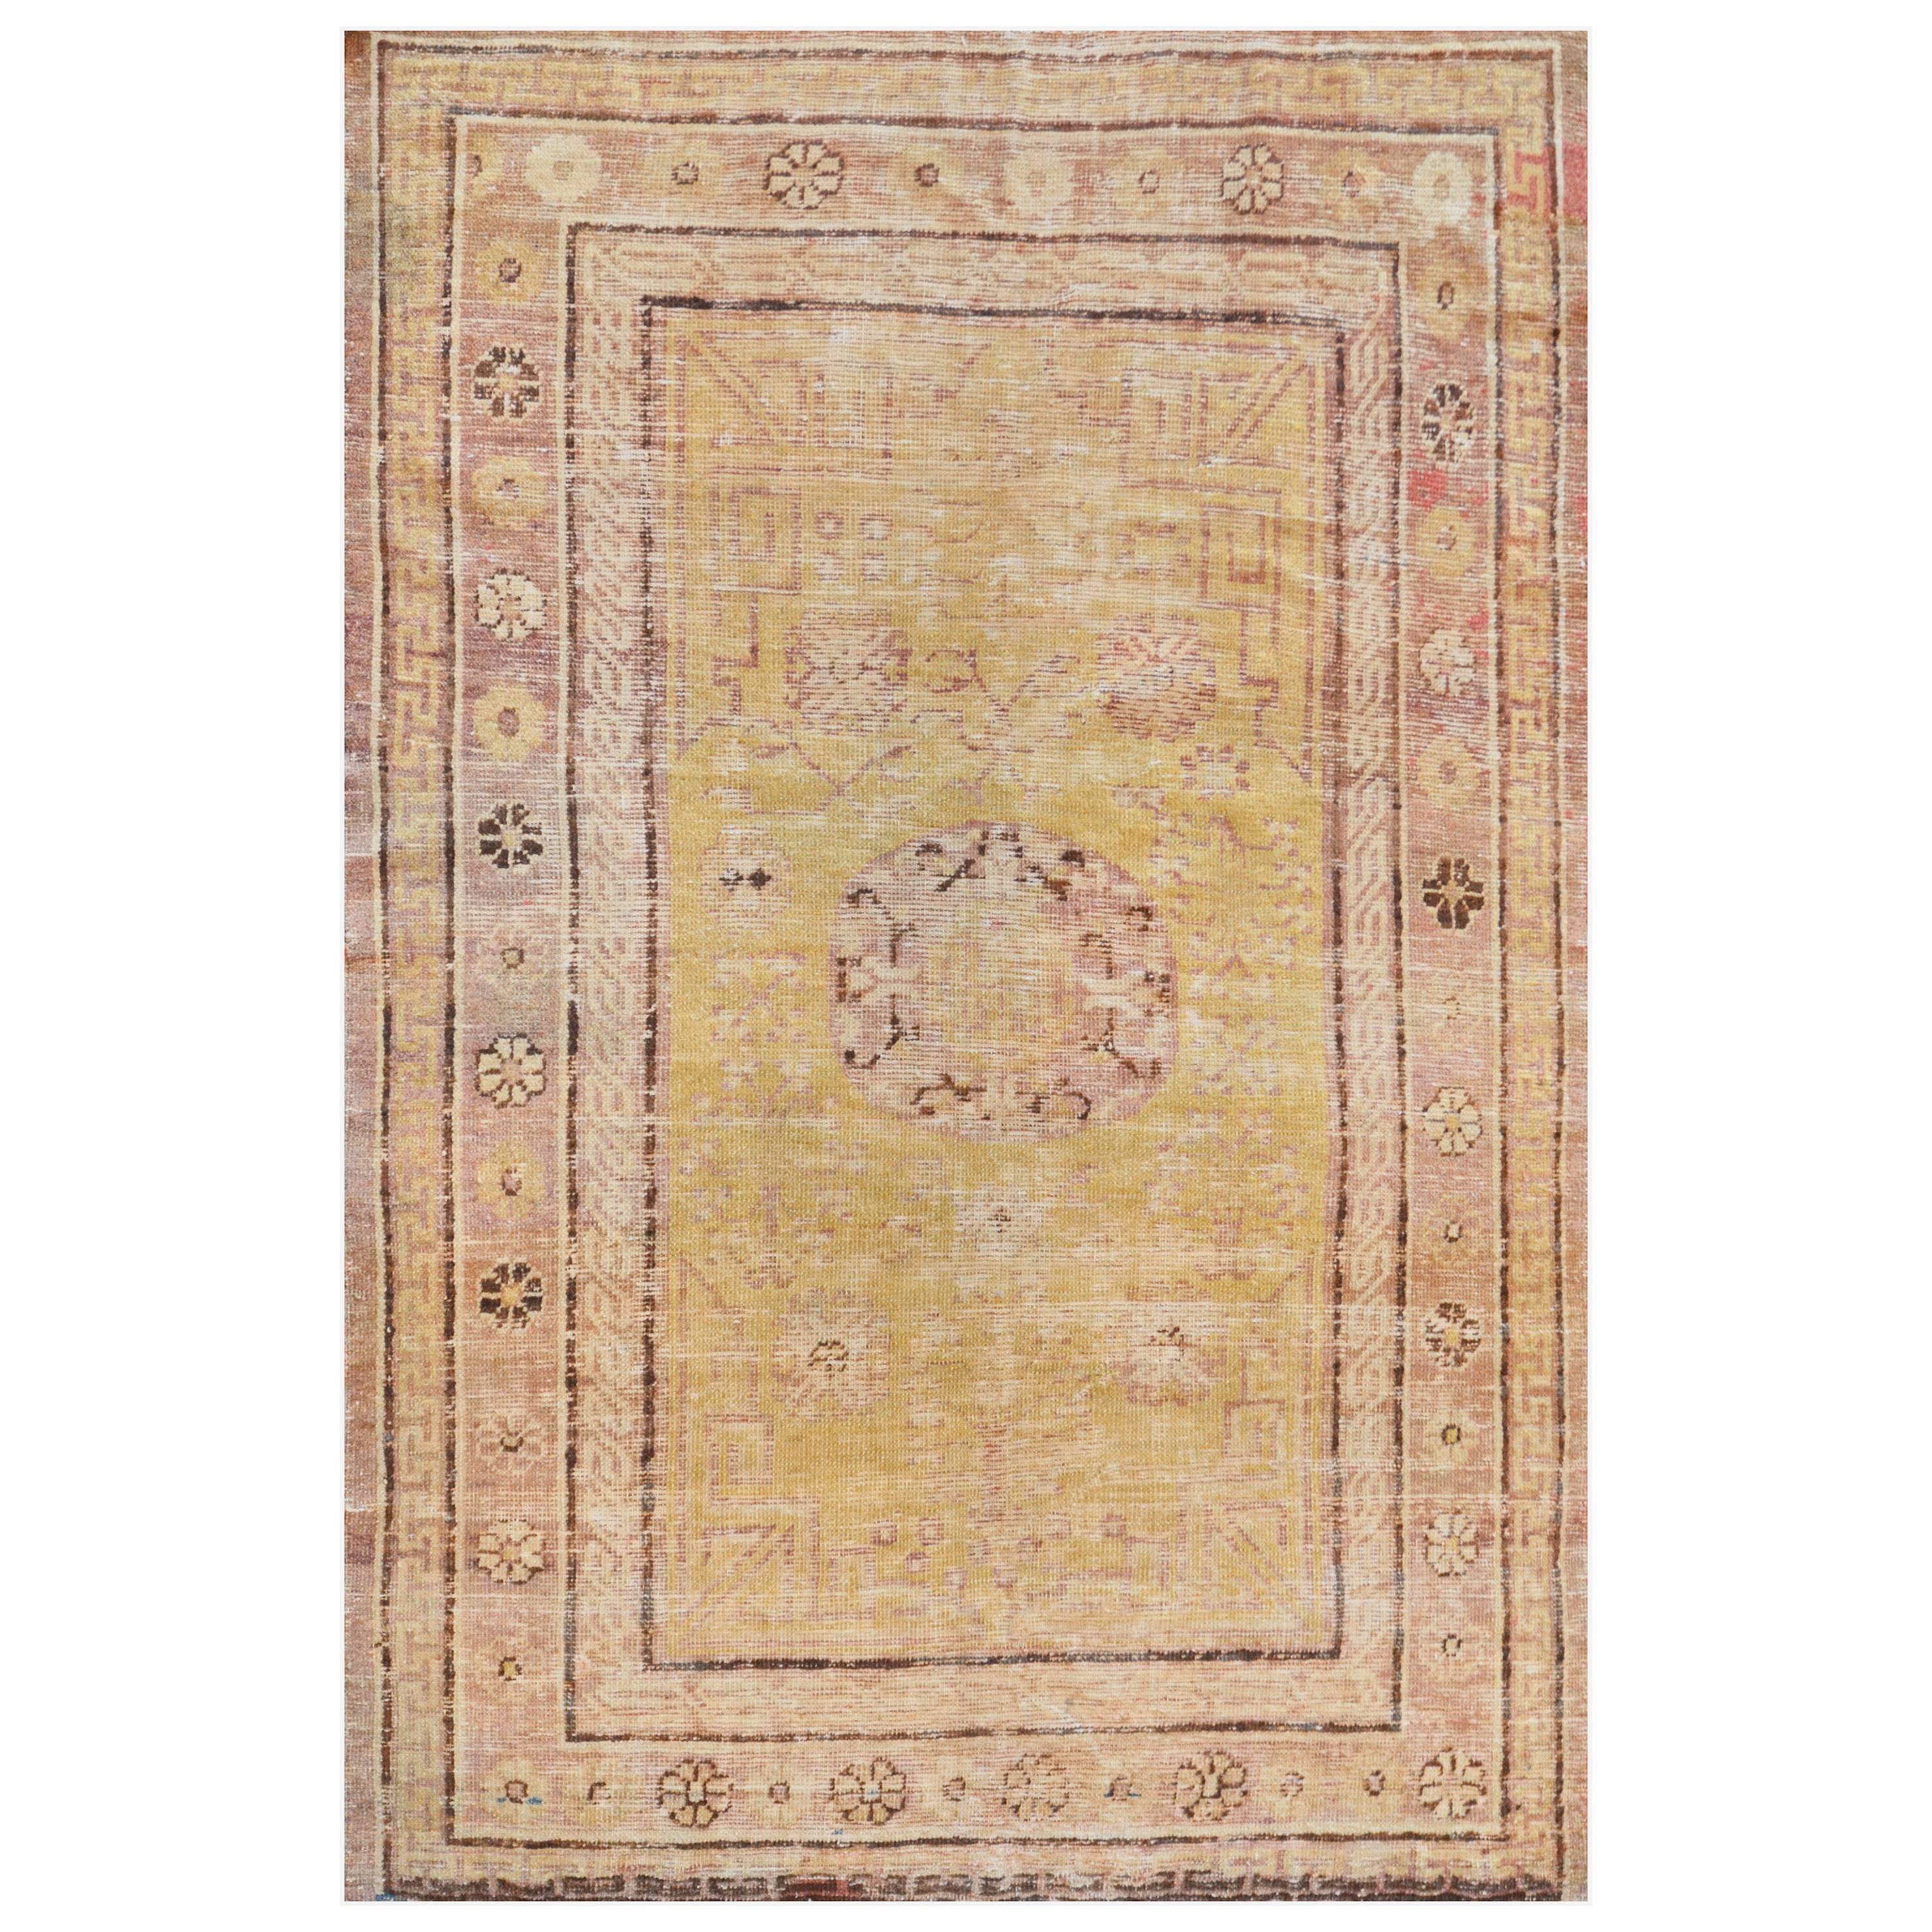 Late 19th Century Khotan Rug from East Turkestan